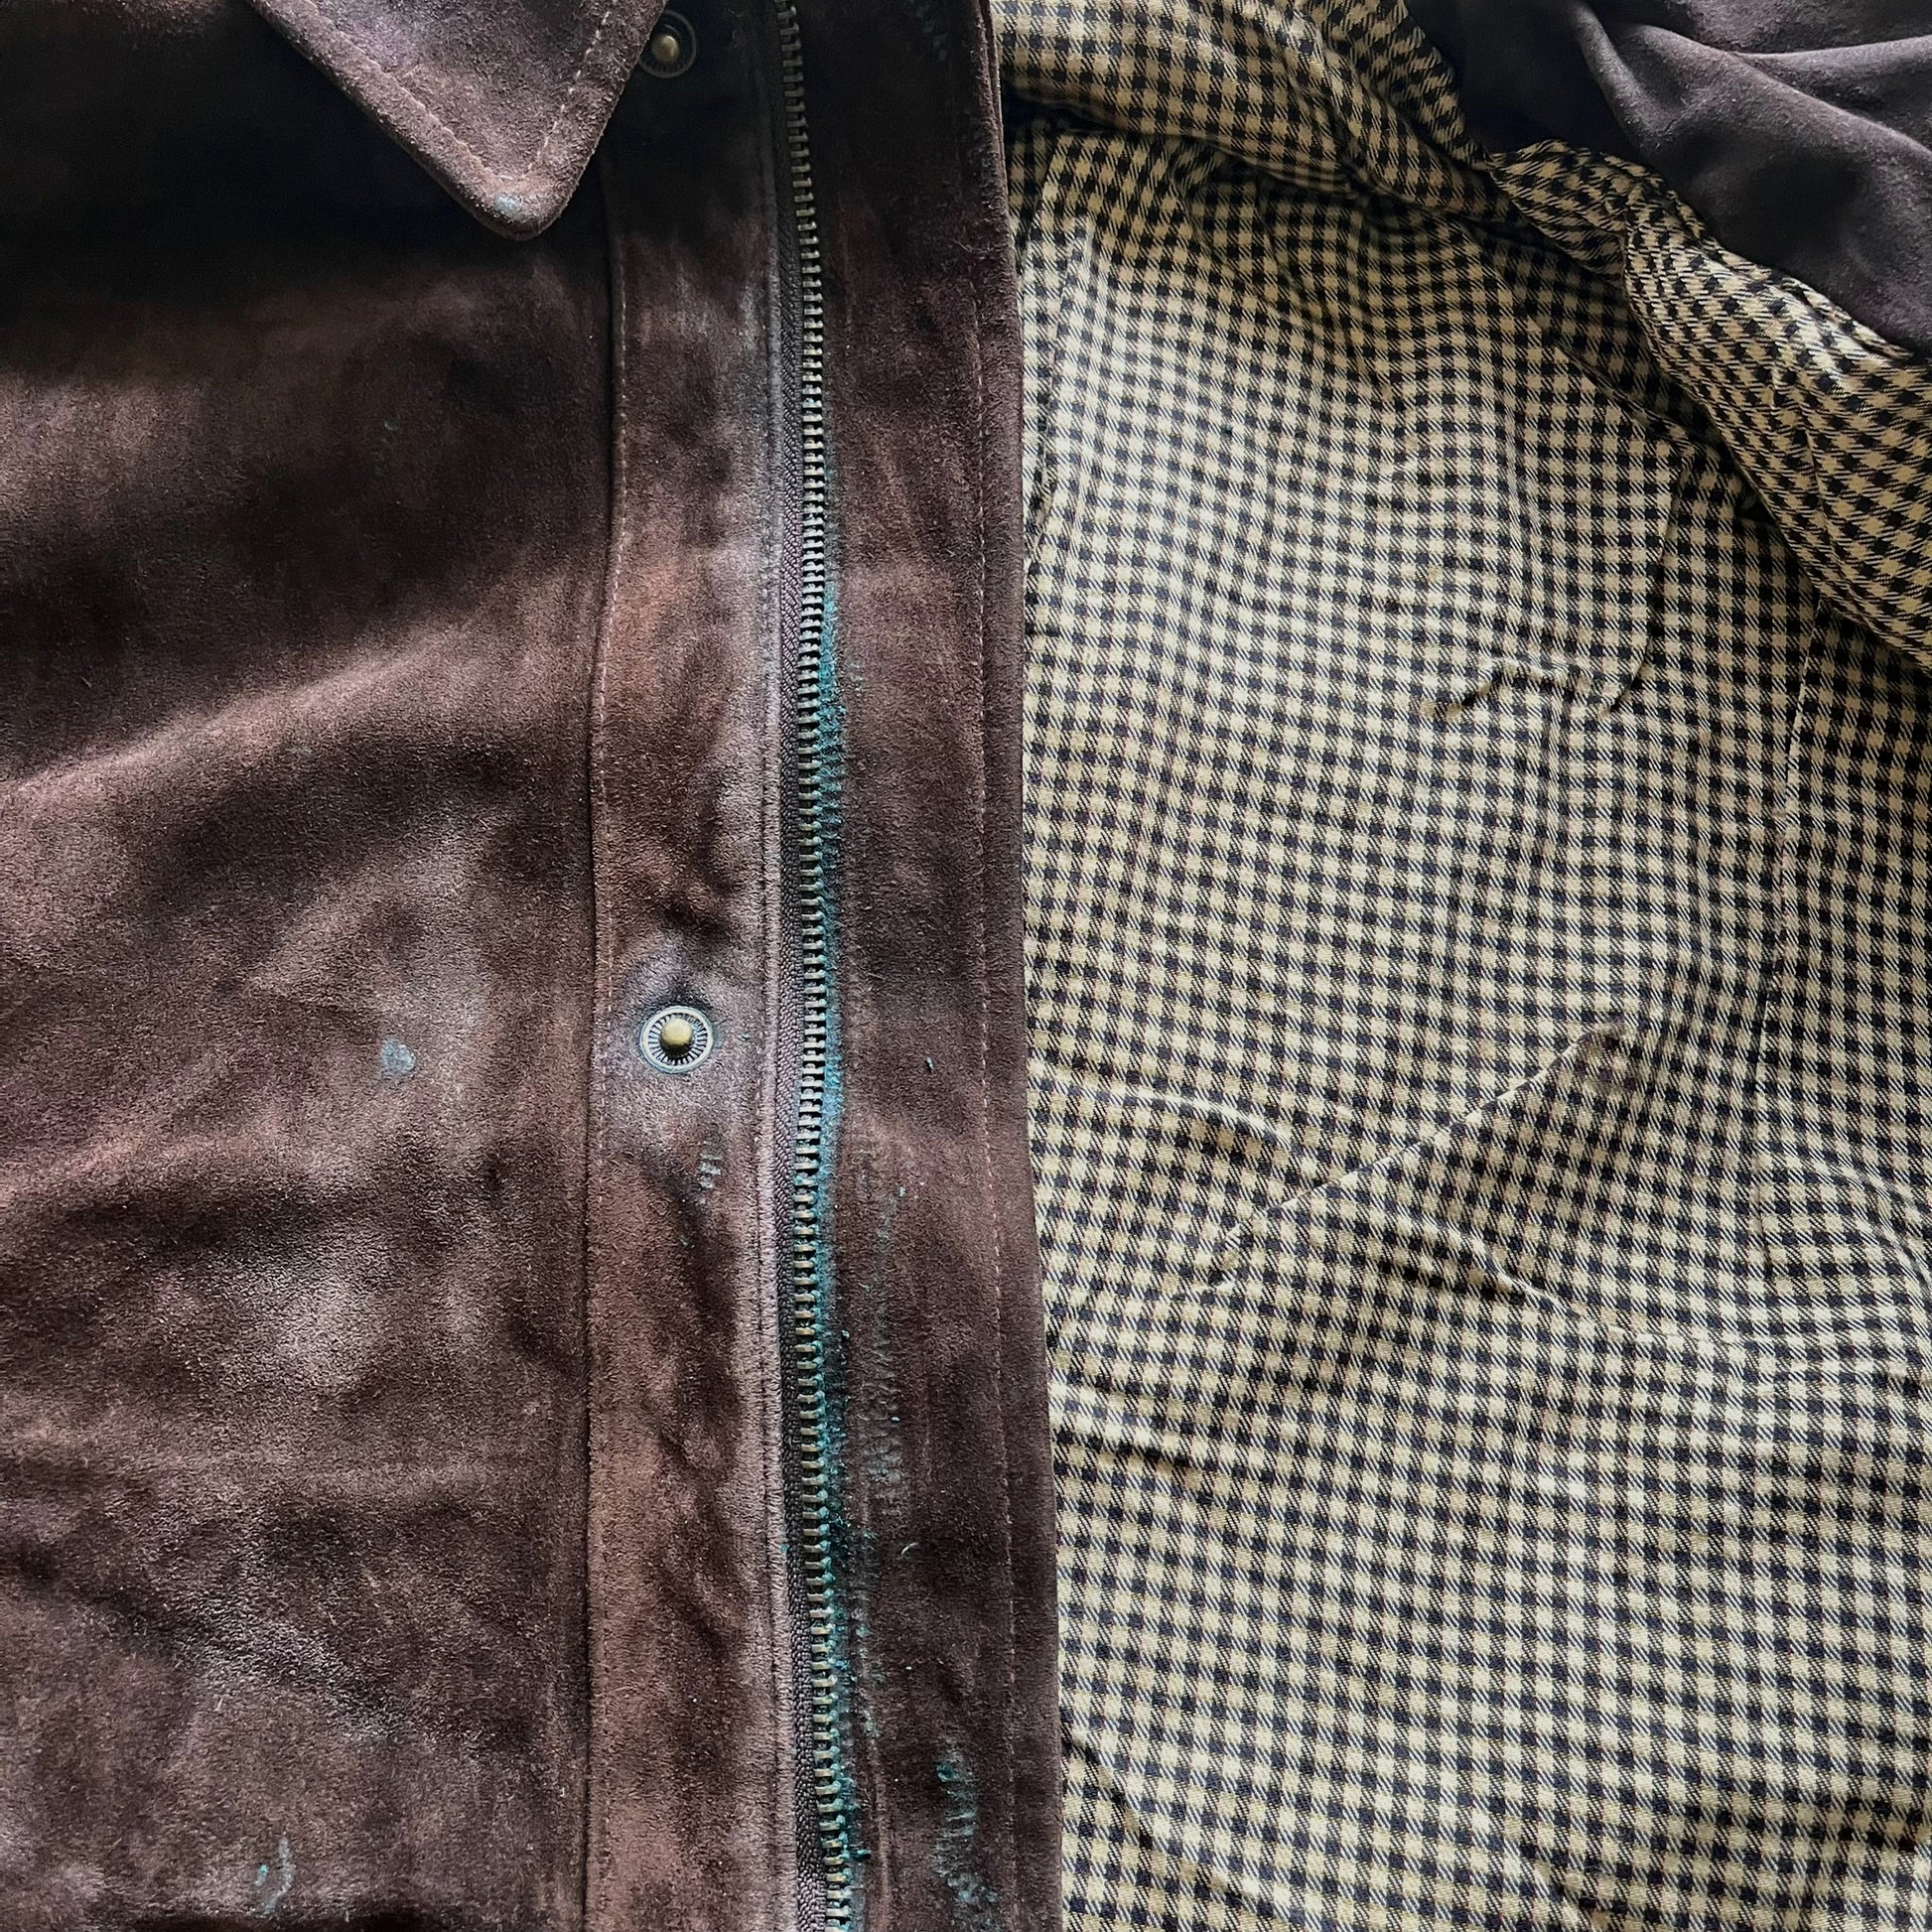 Vintage 90s Polo Ralph Lauren Brown Leather Jacket Wear - Casspios Dream